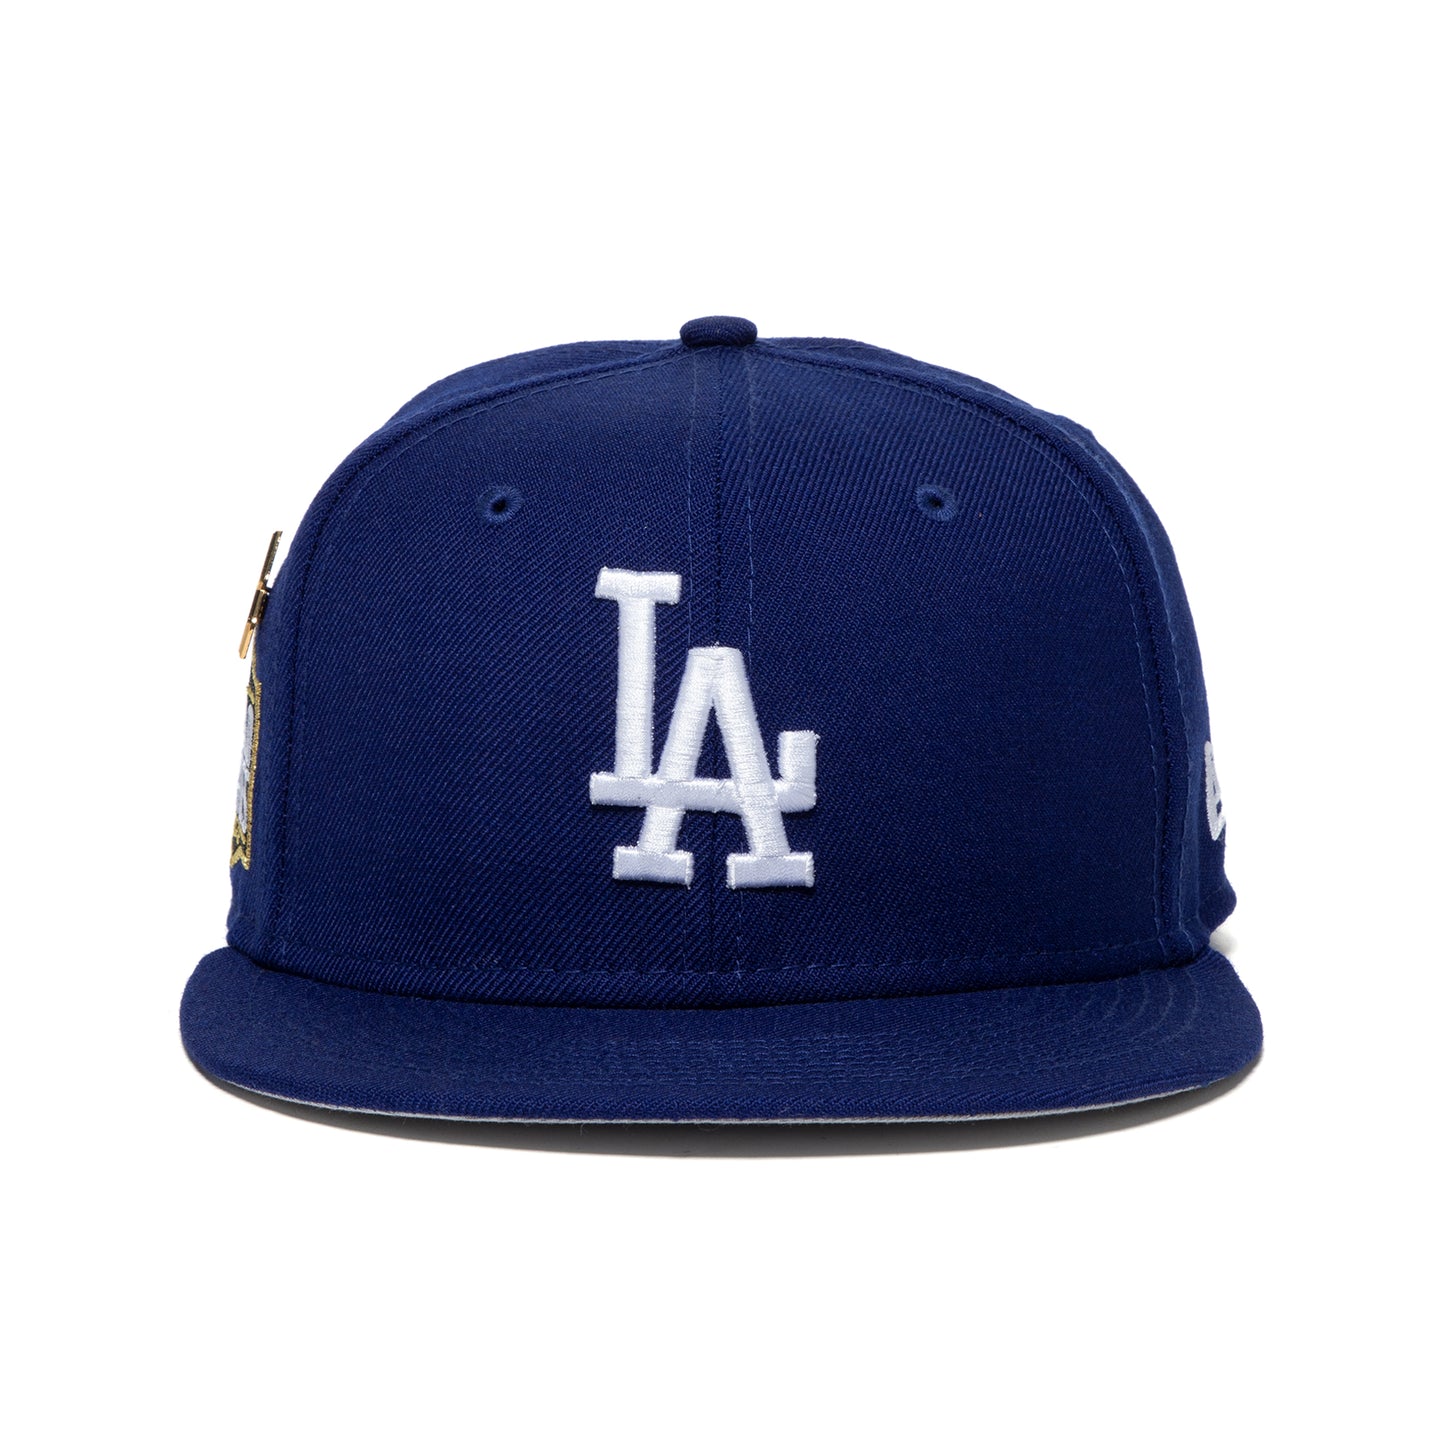 Dodgers Blue Heaven: Origins of the Dodgers Iconic LA Cap Design